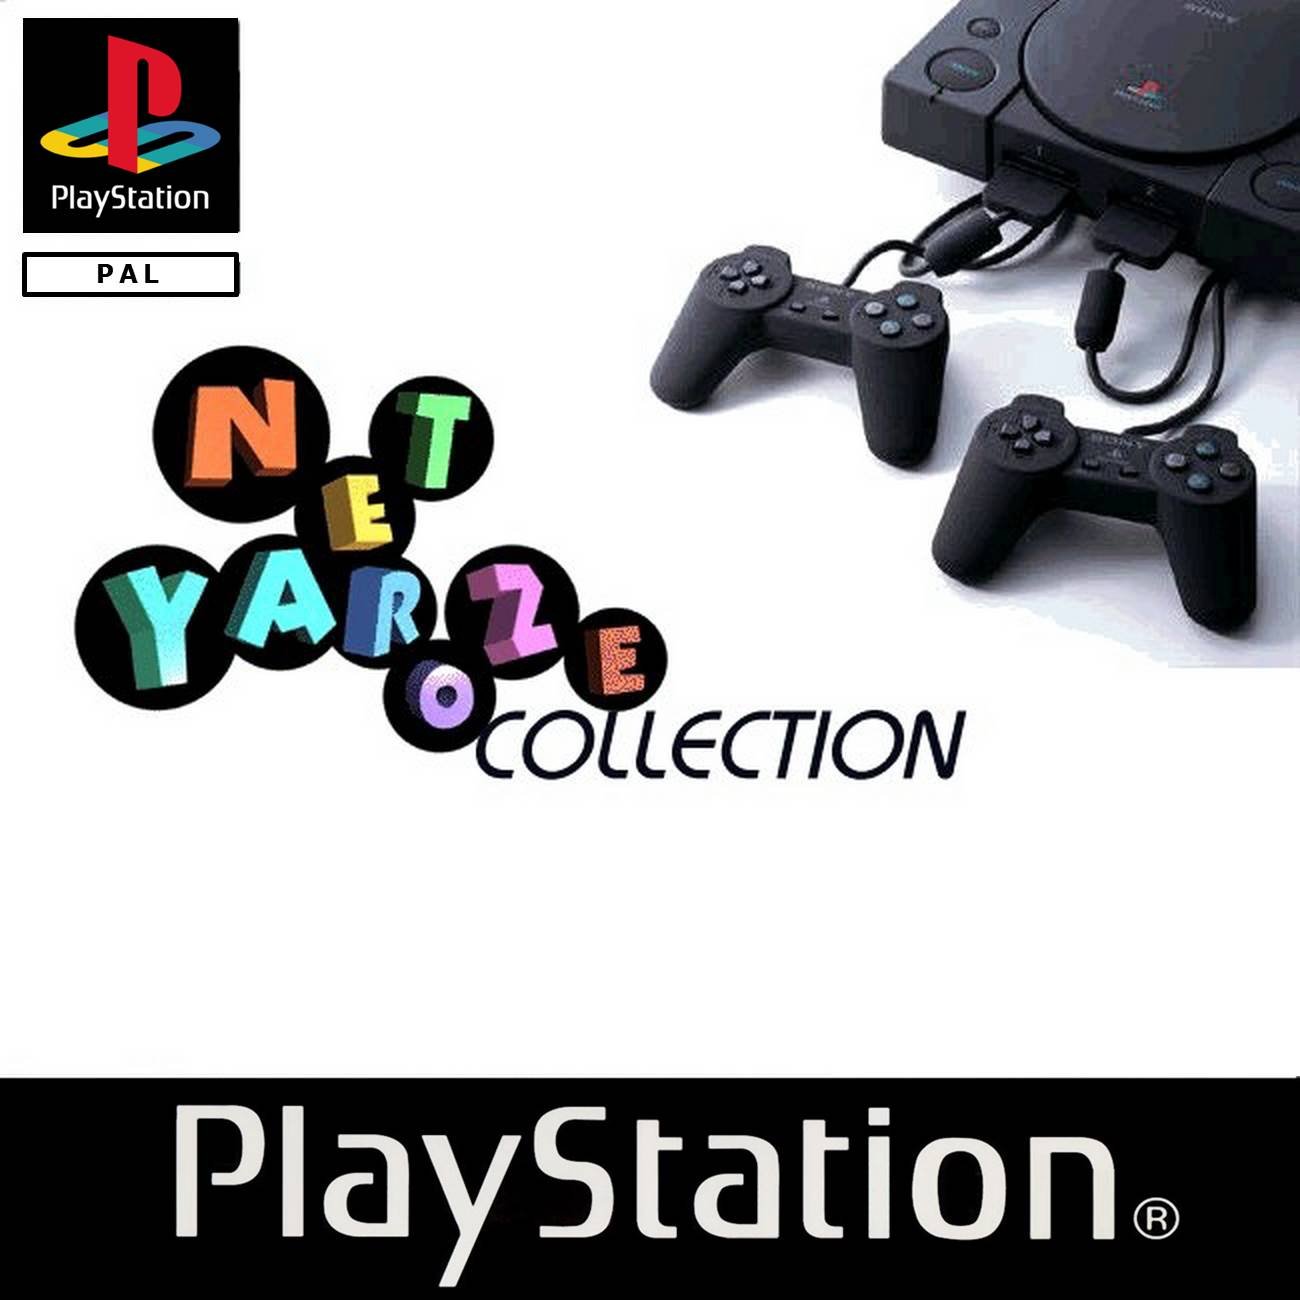 Net Yaroze Collection